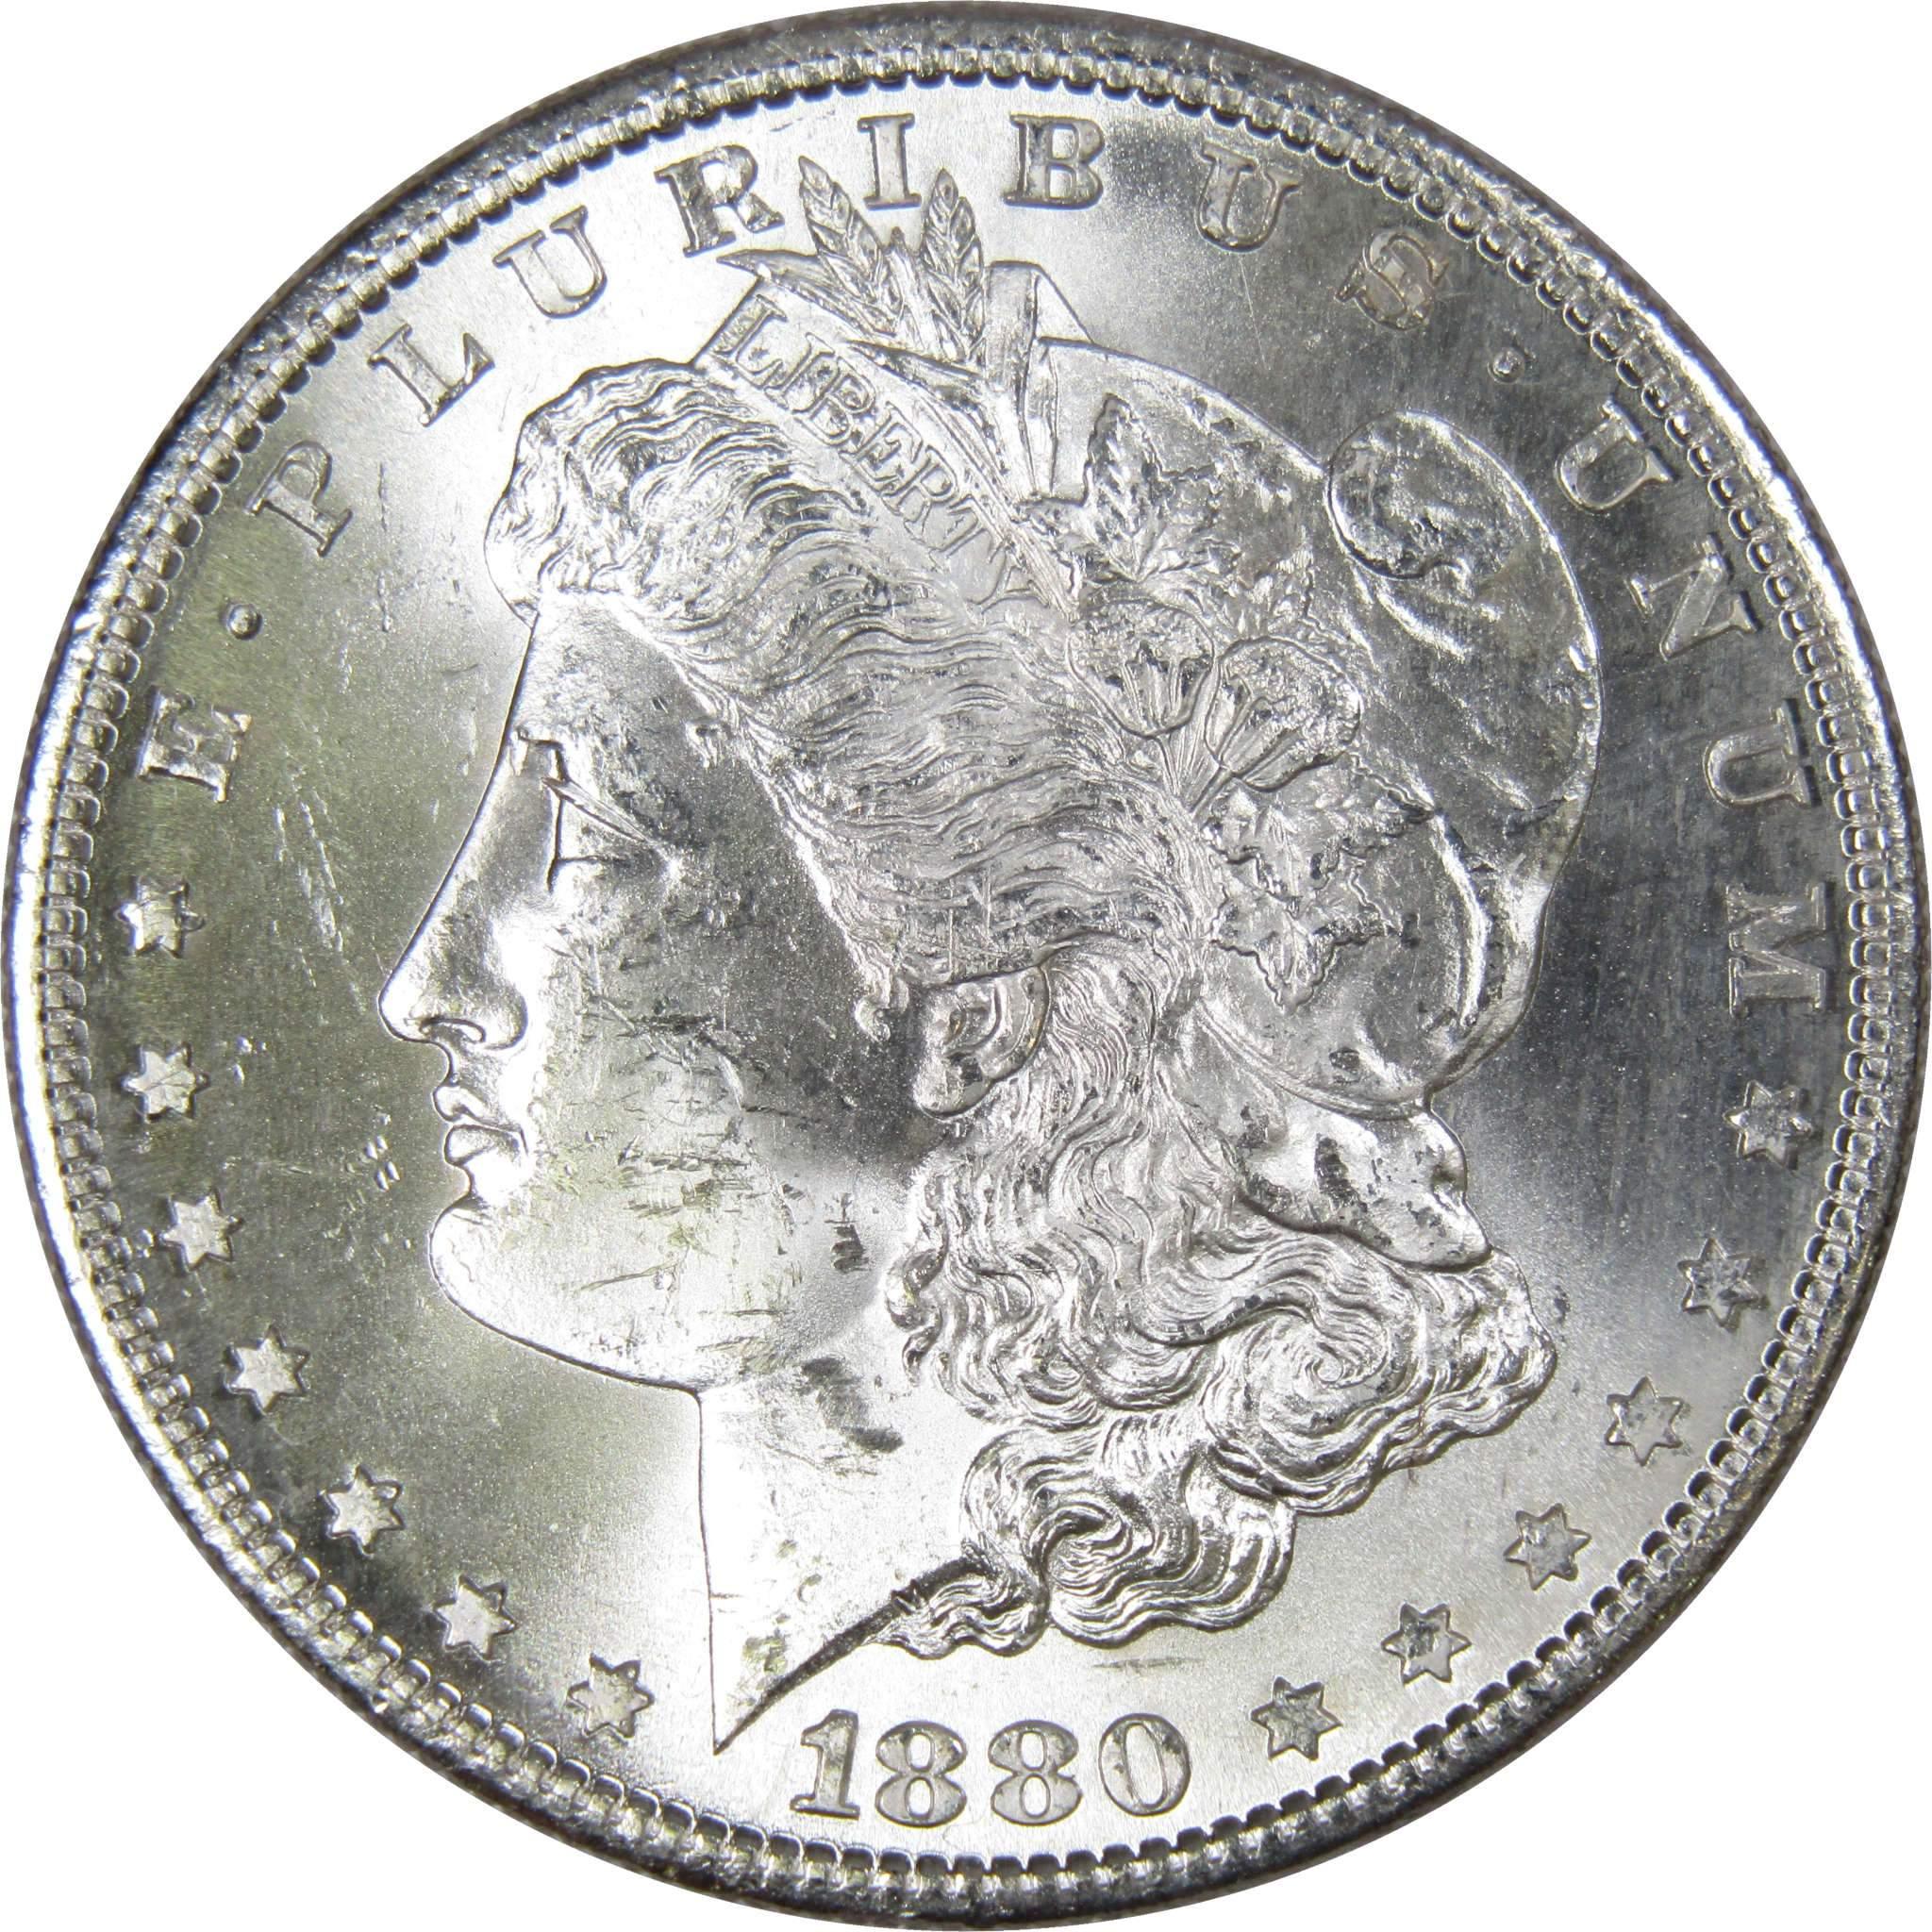 1880 S Morgan Dollar BU Uncirculated Mint State 90% Silver $1 US Coin - Morgan coin - Morgan silver dollar - Morgan silver dollar for sale - Profile Coins &amp; Collectibles